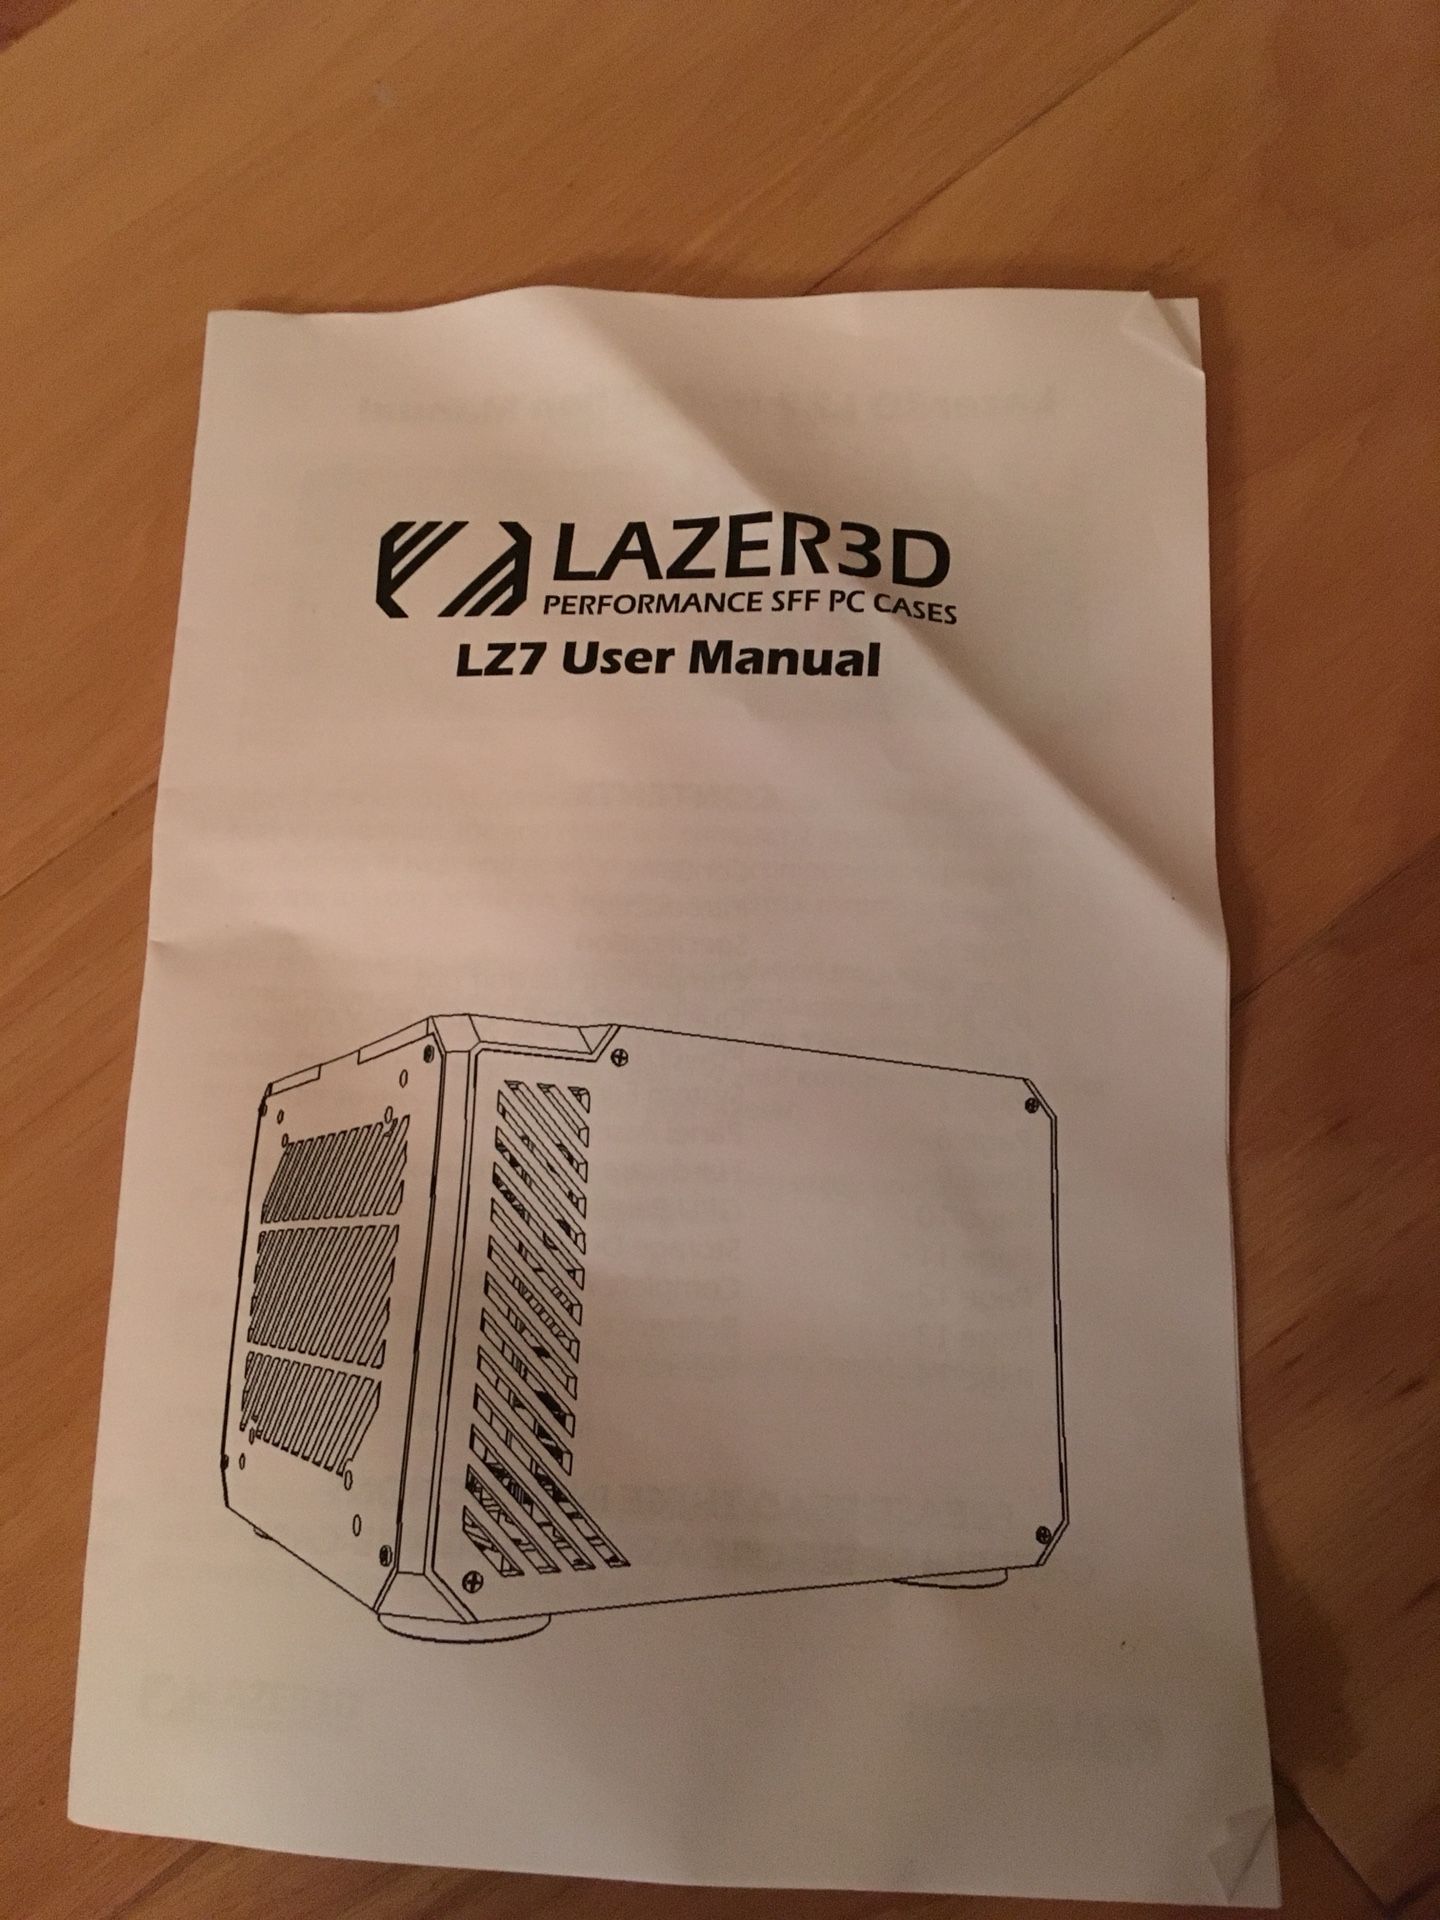 Lazed lz7, mini itx case